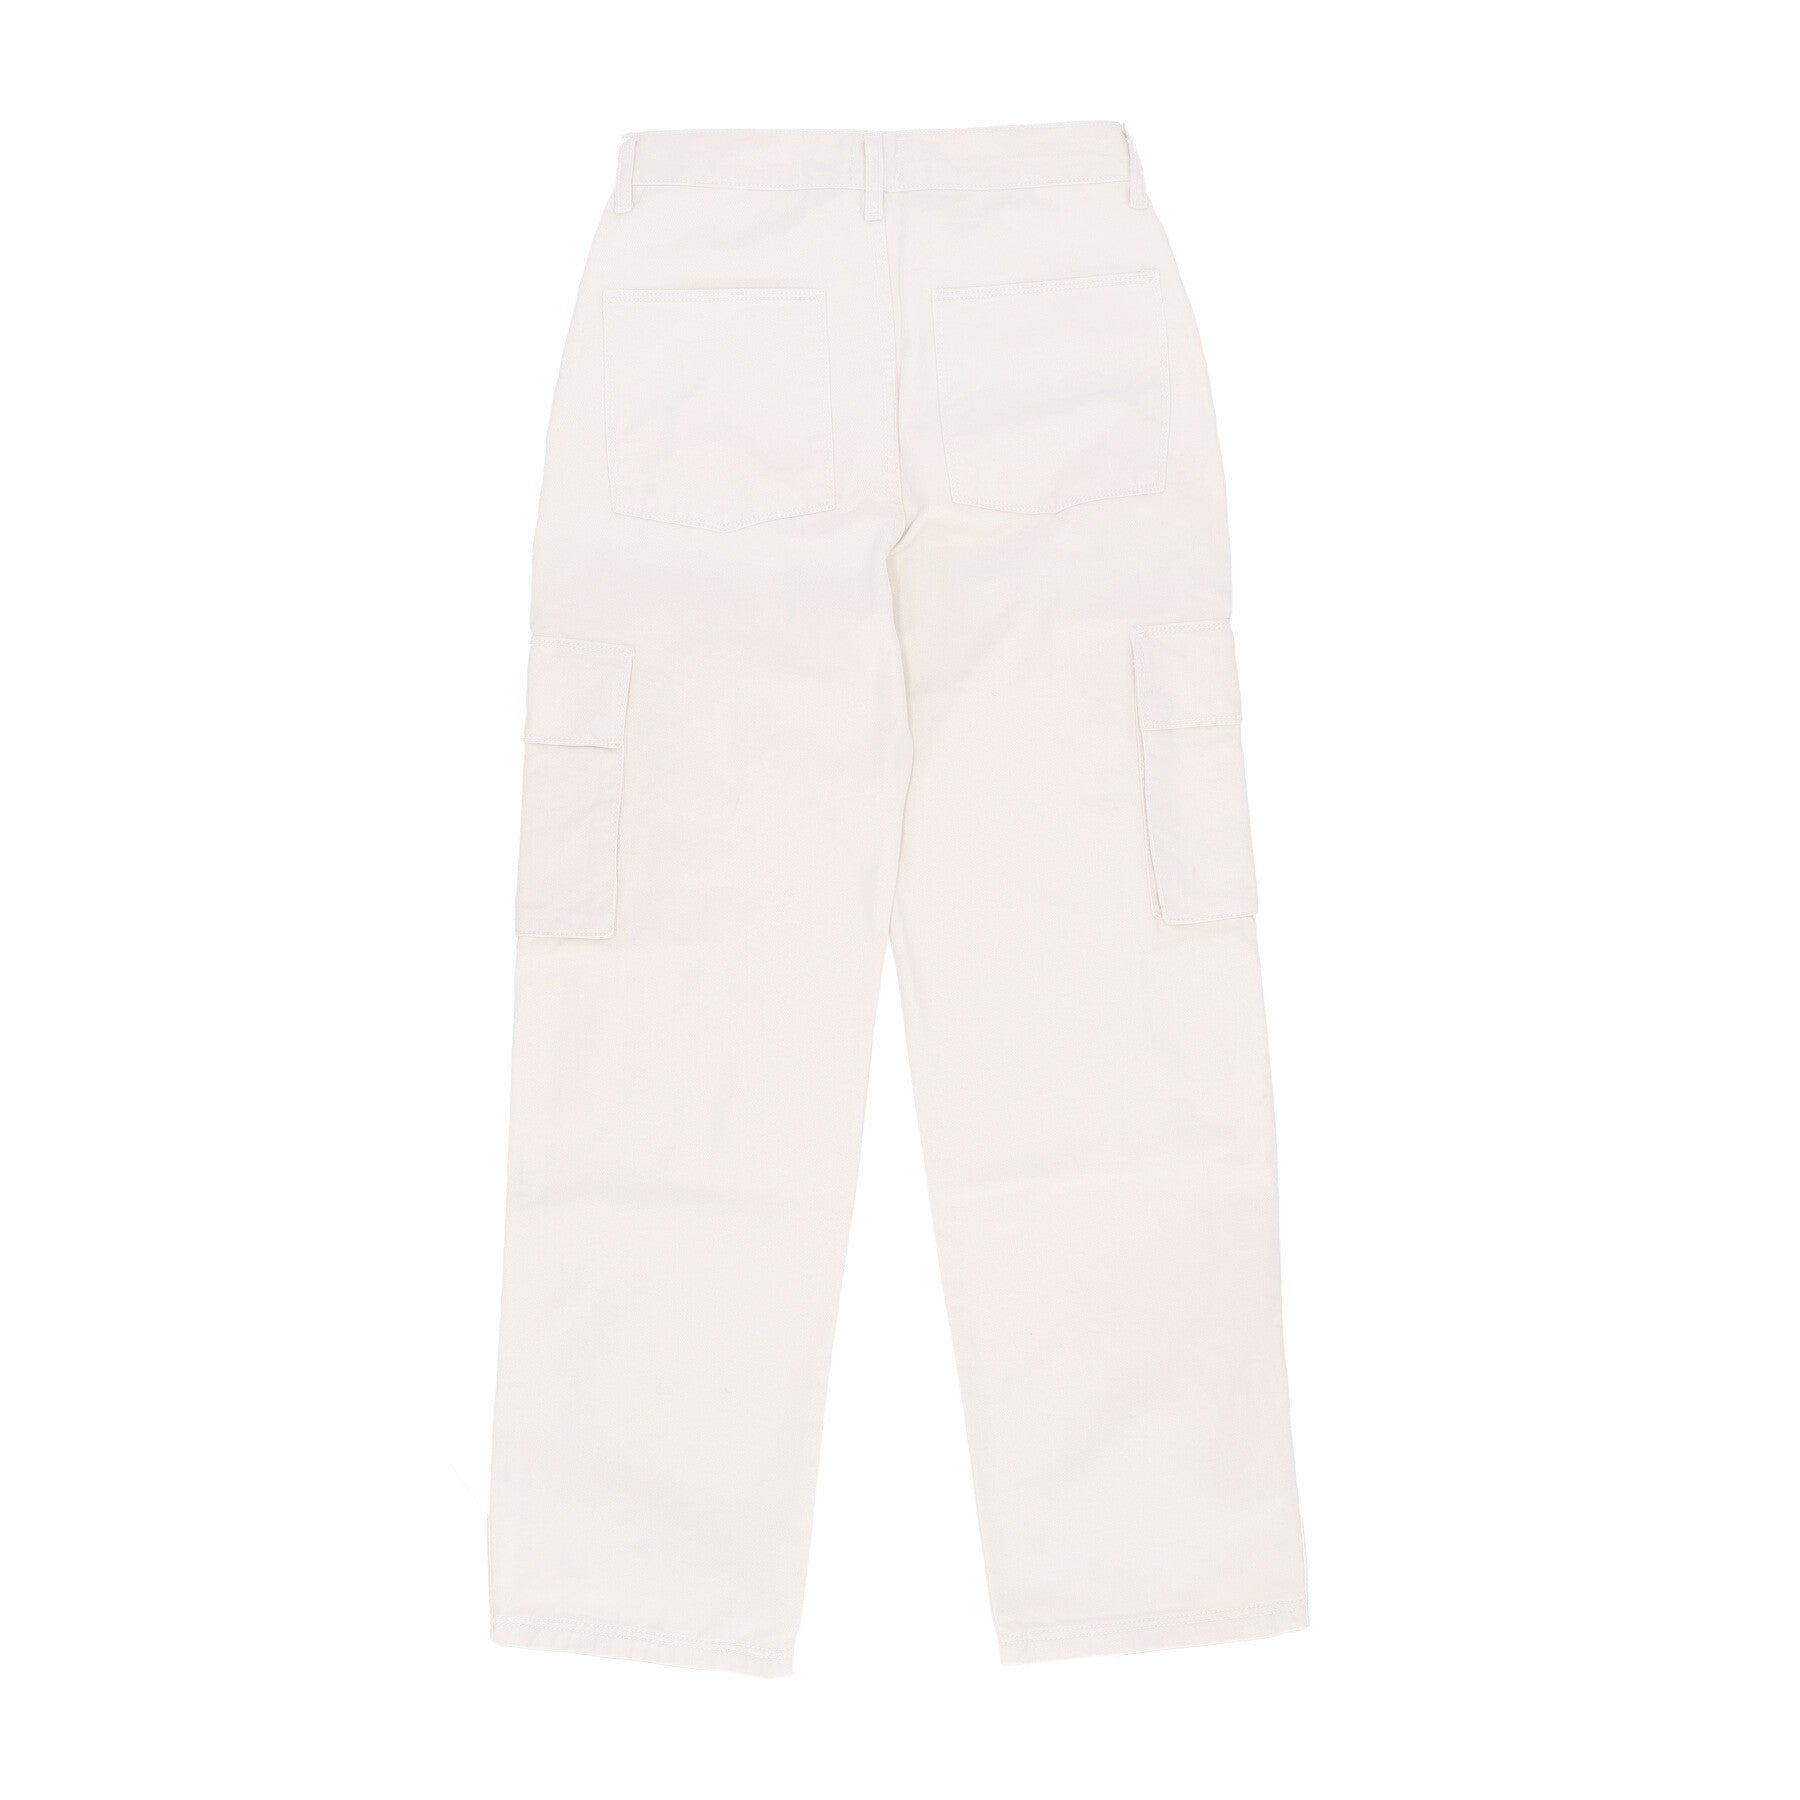 Peter Detail Pocket Pants Cream Men's Long Trousers